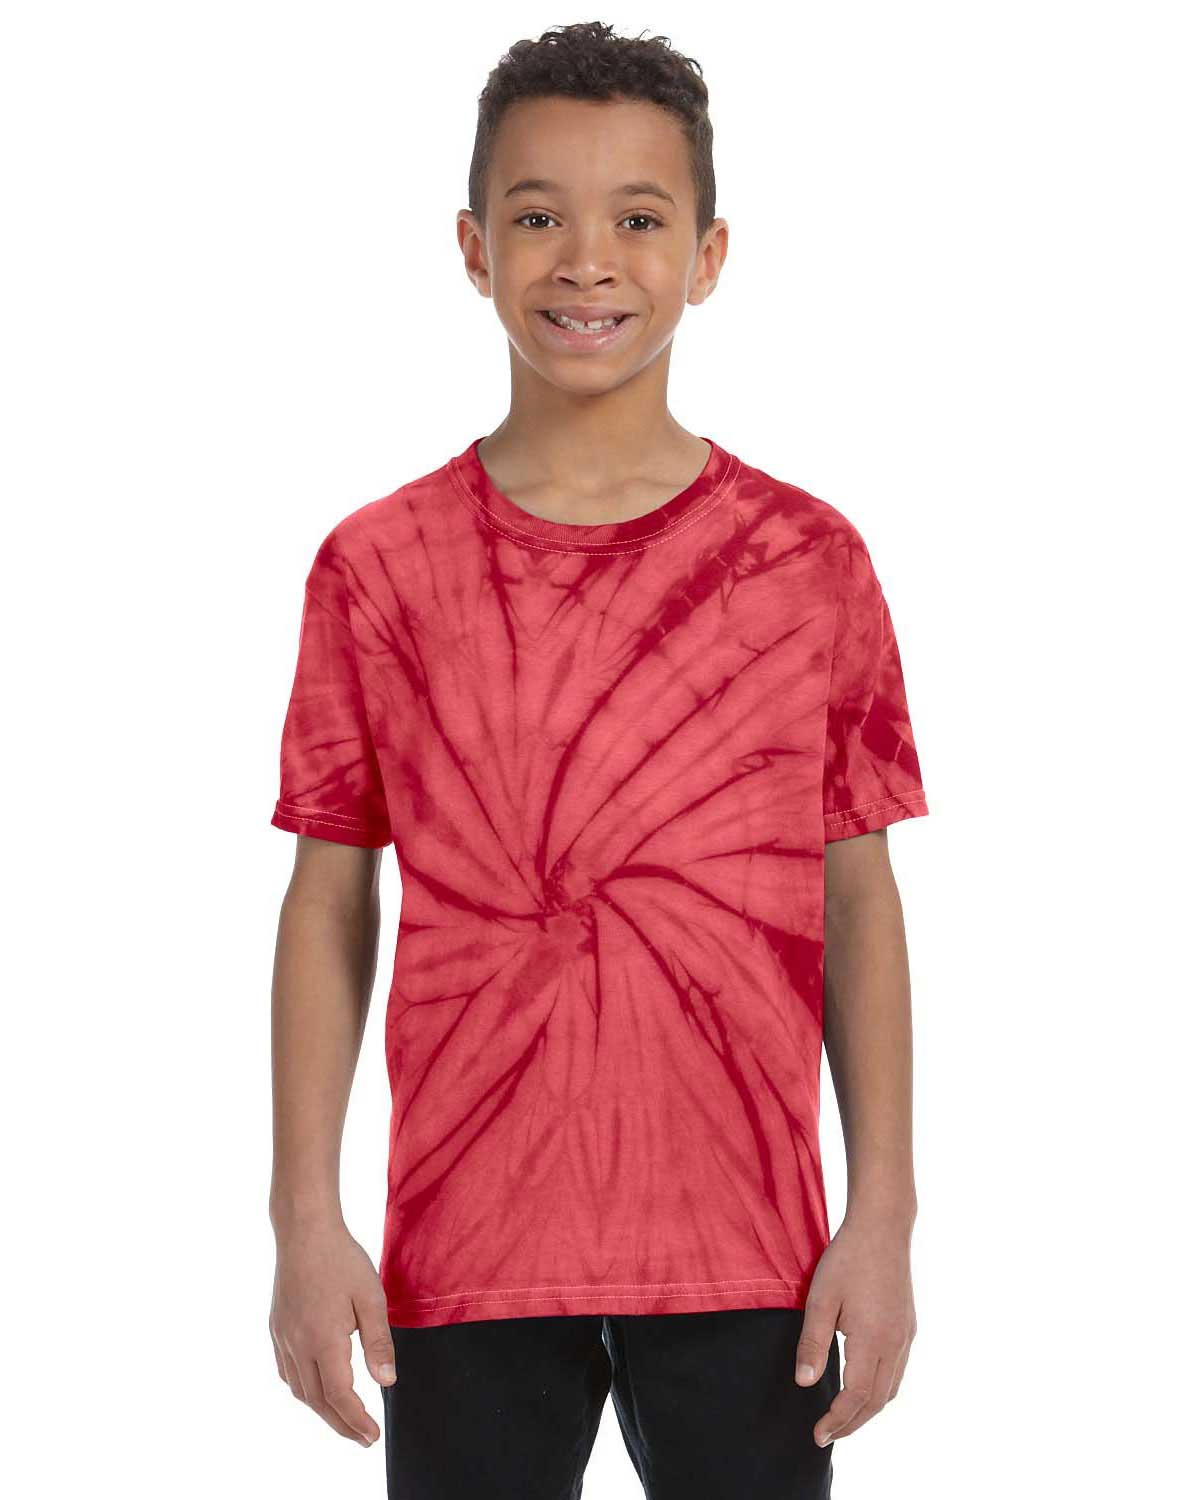 Tie-Dye CD100Y Boys 5.4 oz. 100% Cotton T-Shirt at Apparelstation